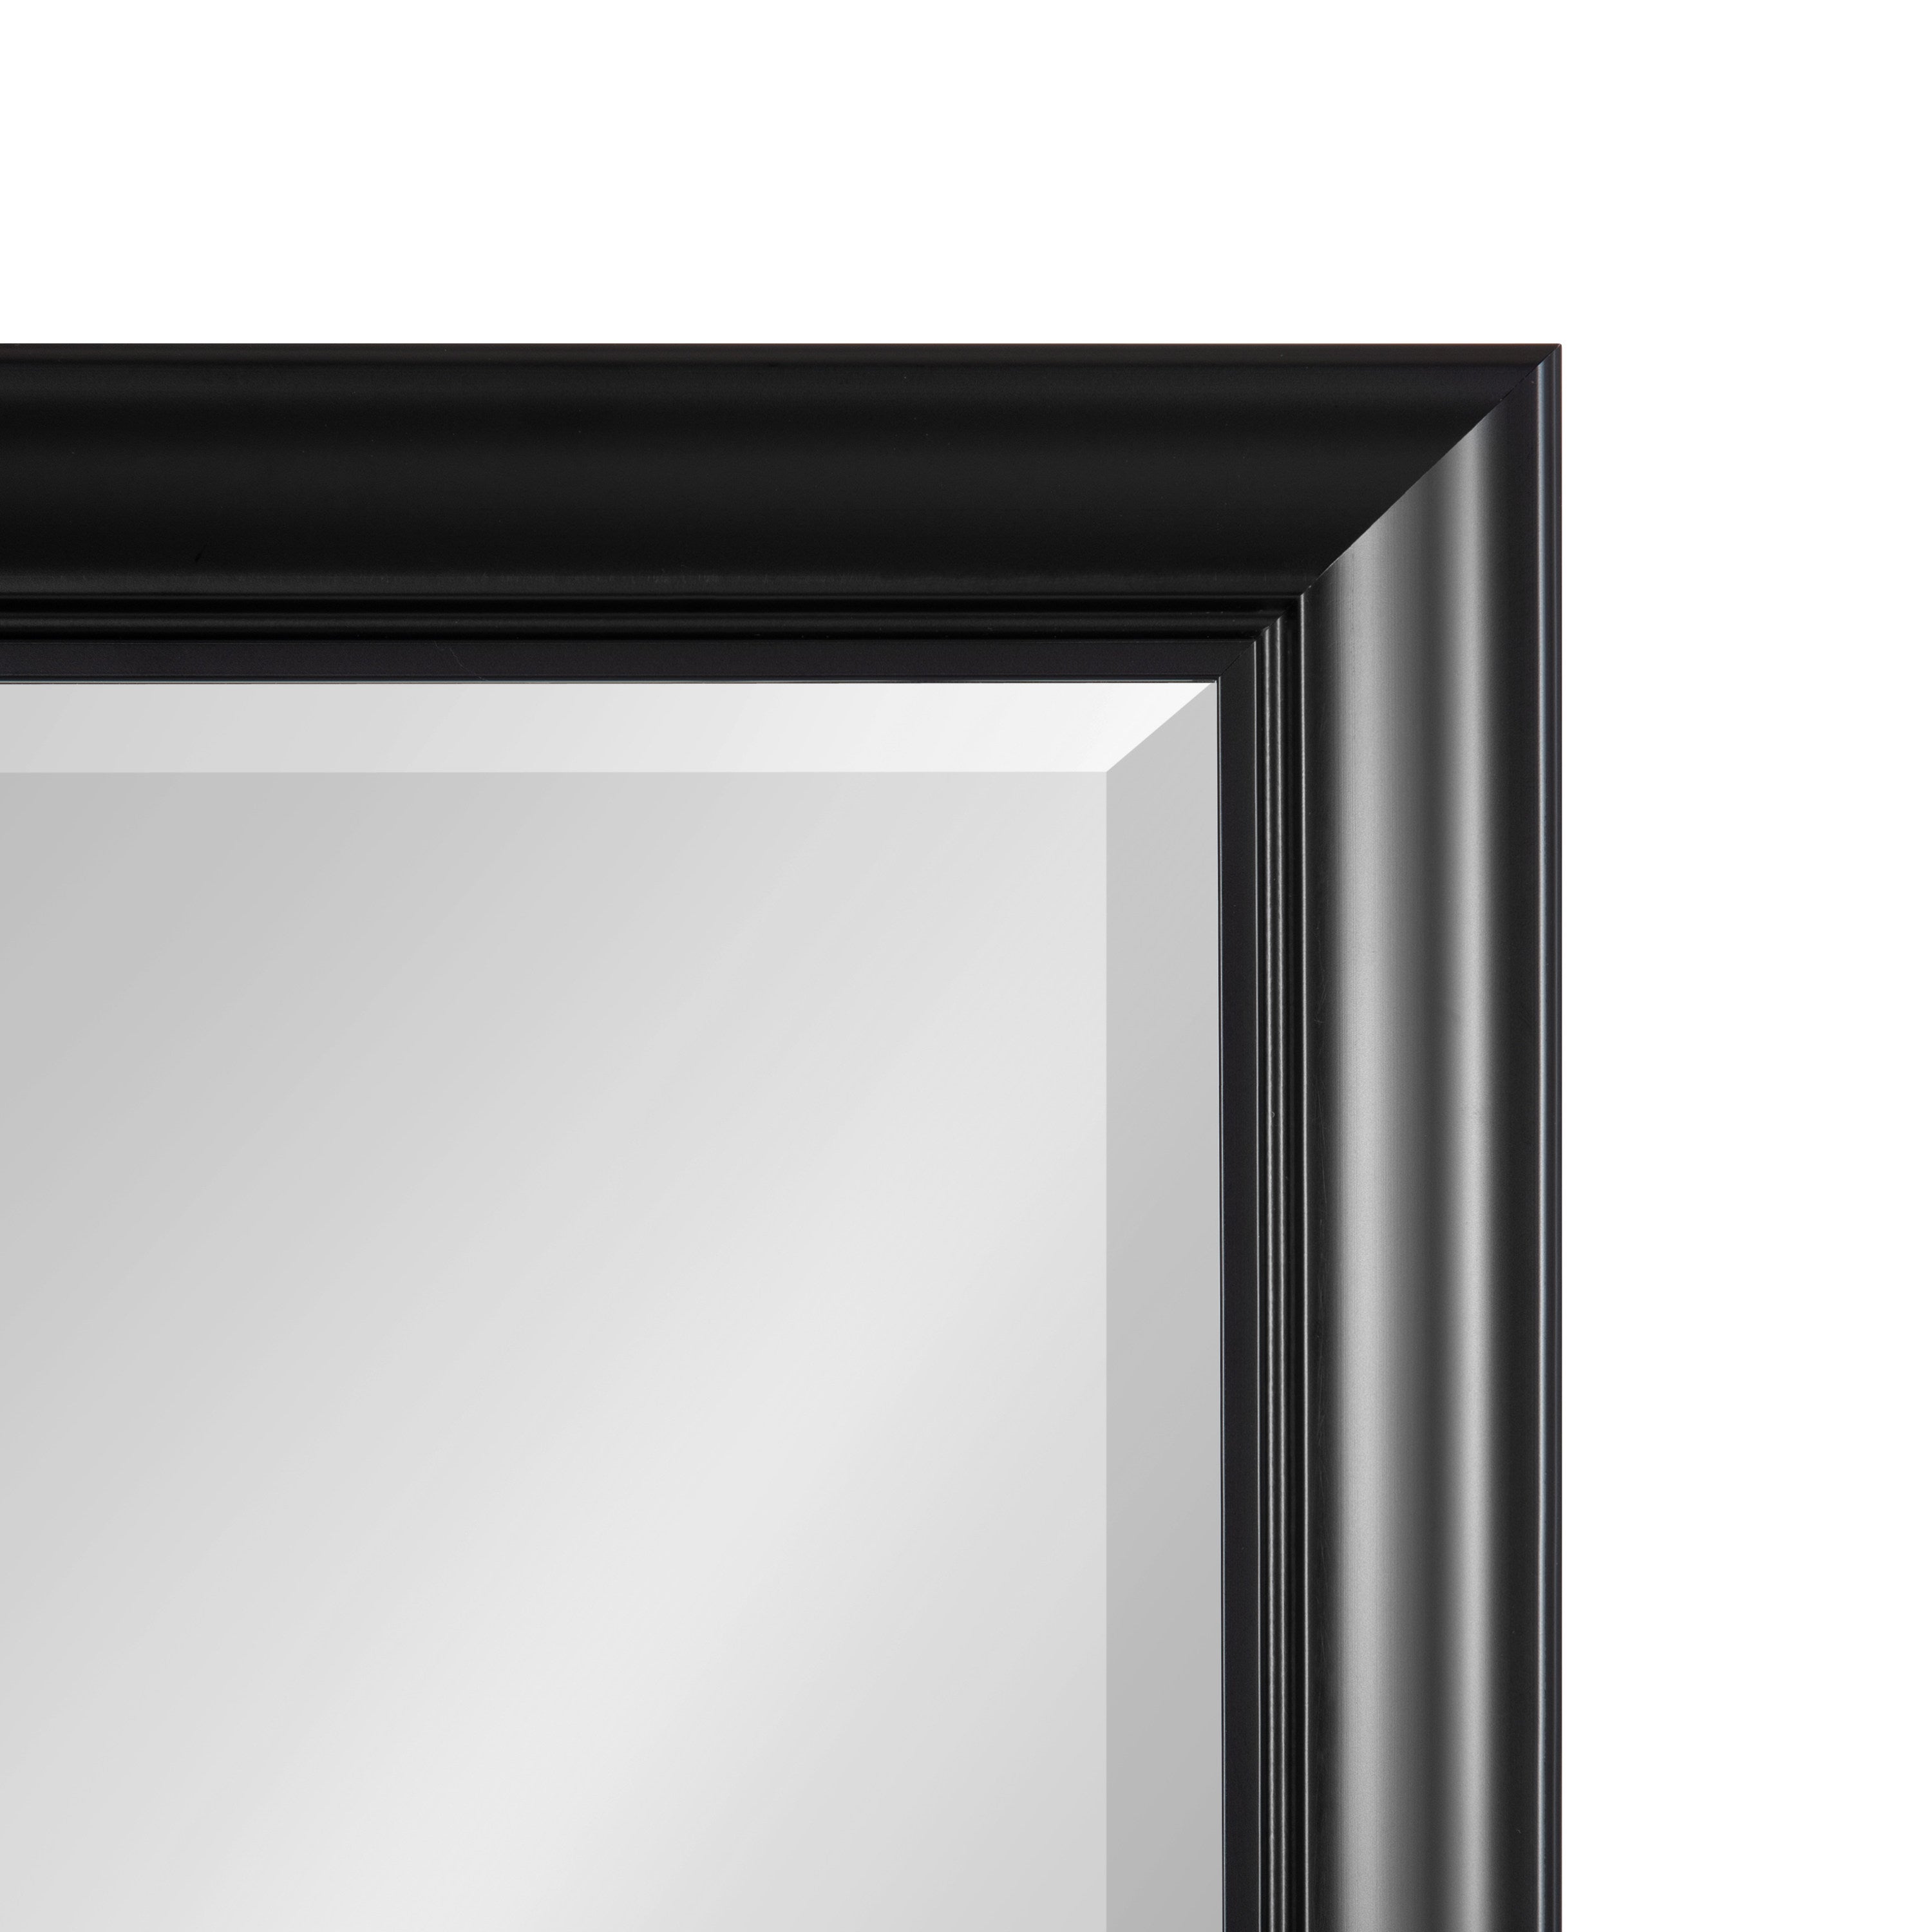 Dalat Framed Wall Mirror